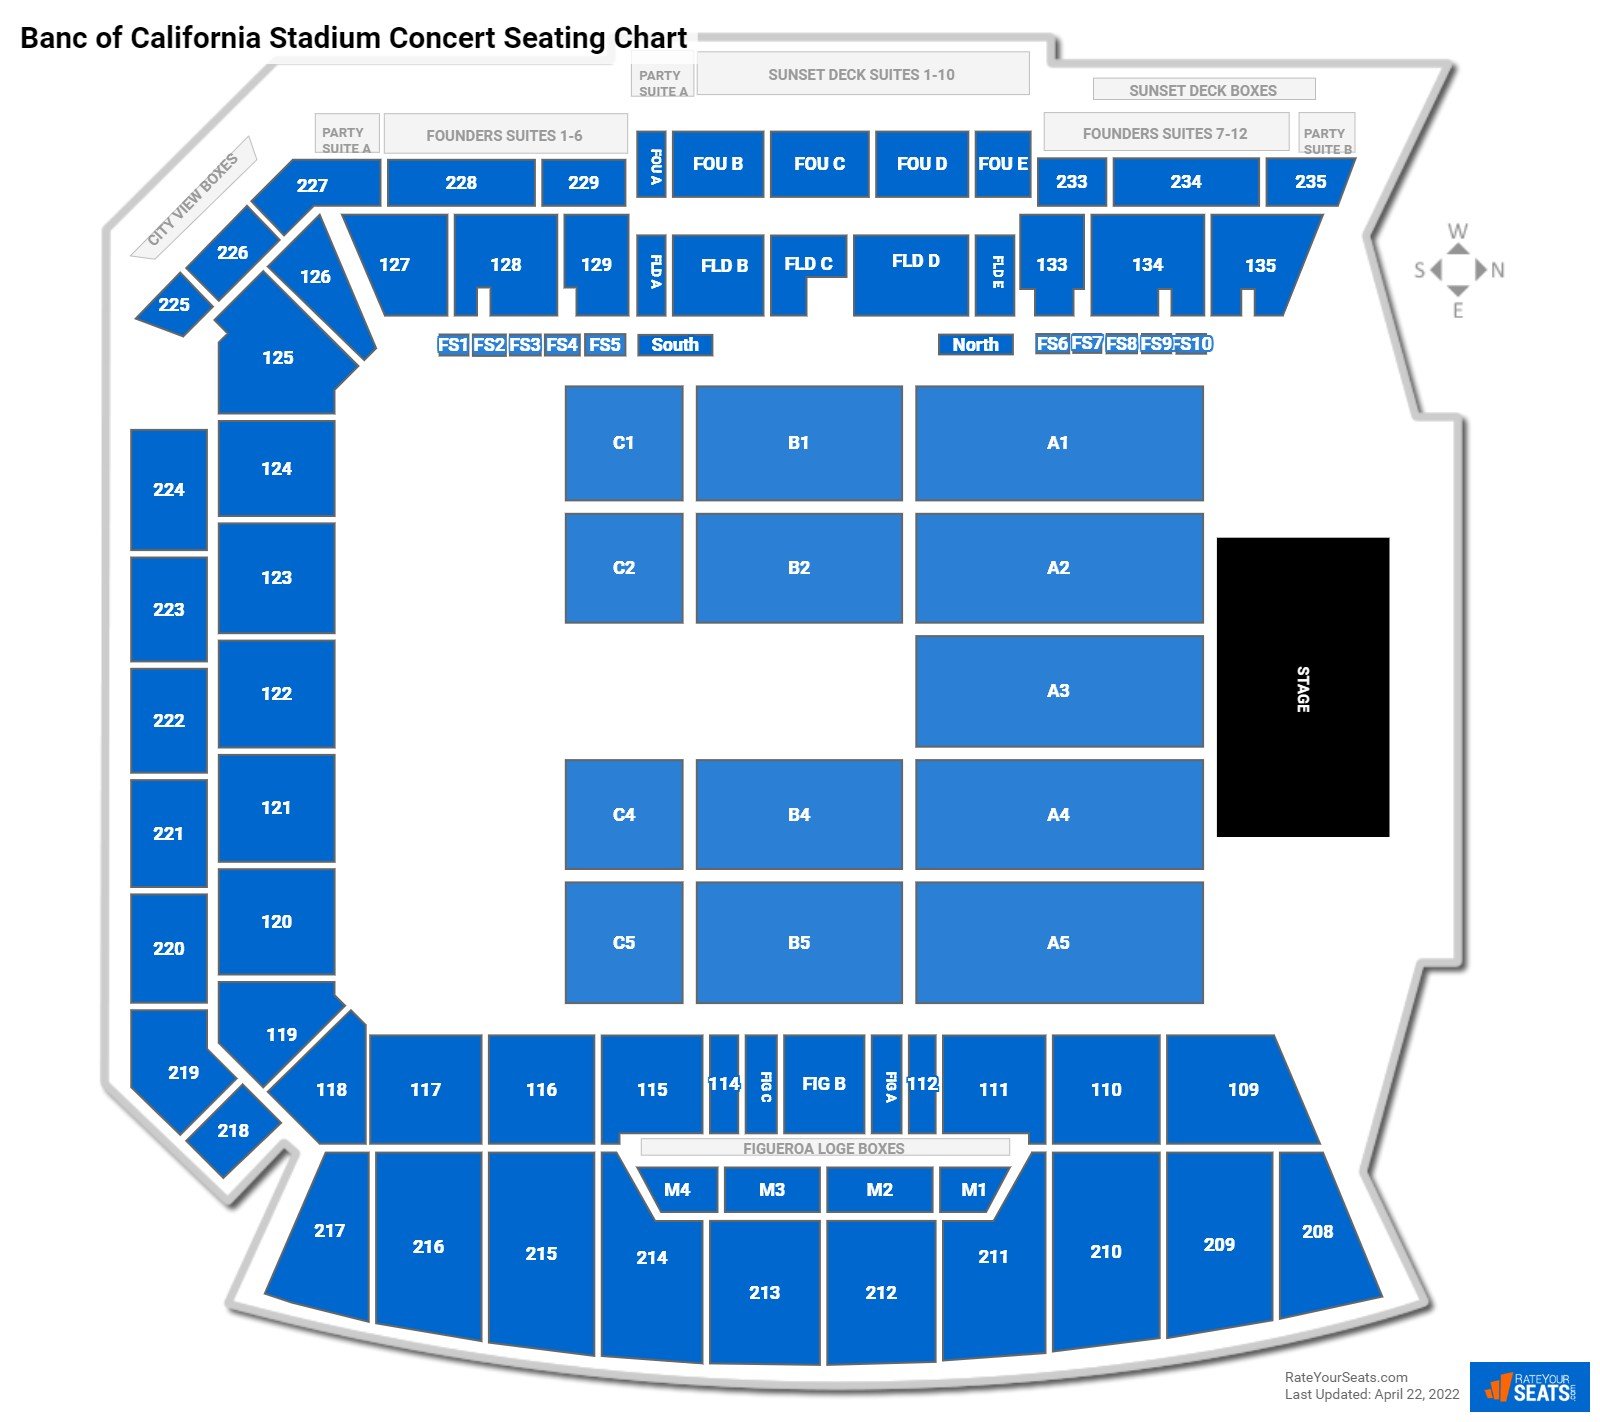 Banc of California Stadium Concert Seating Chart